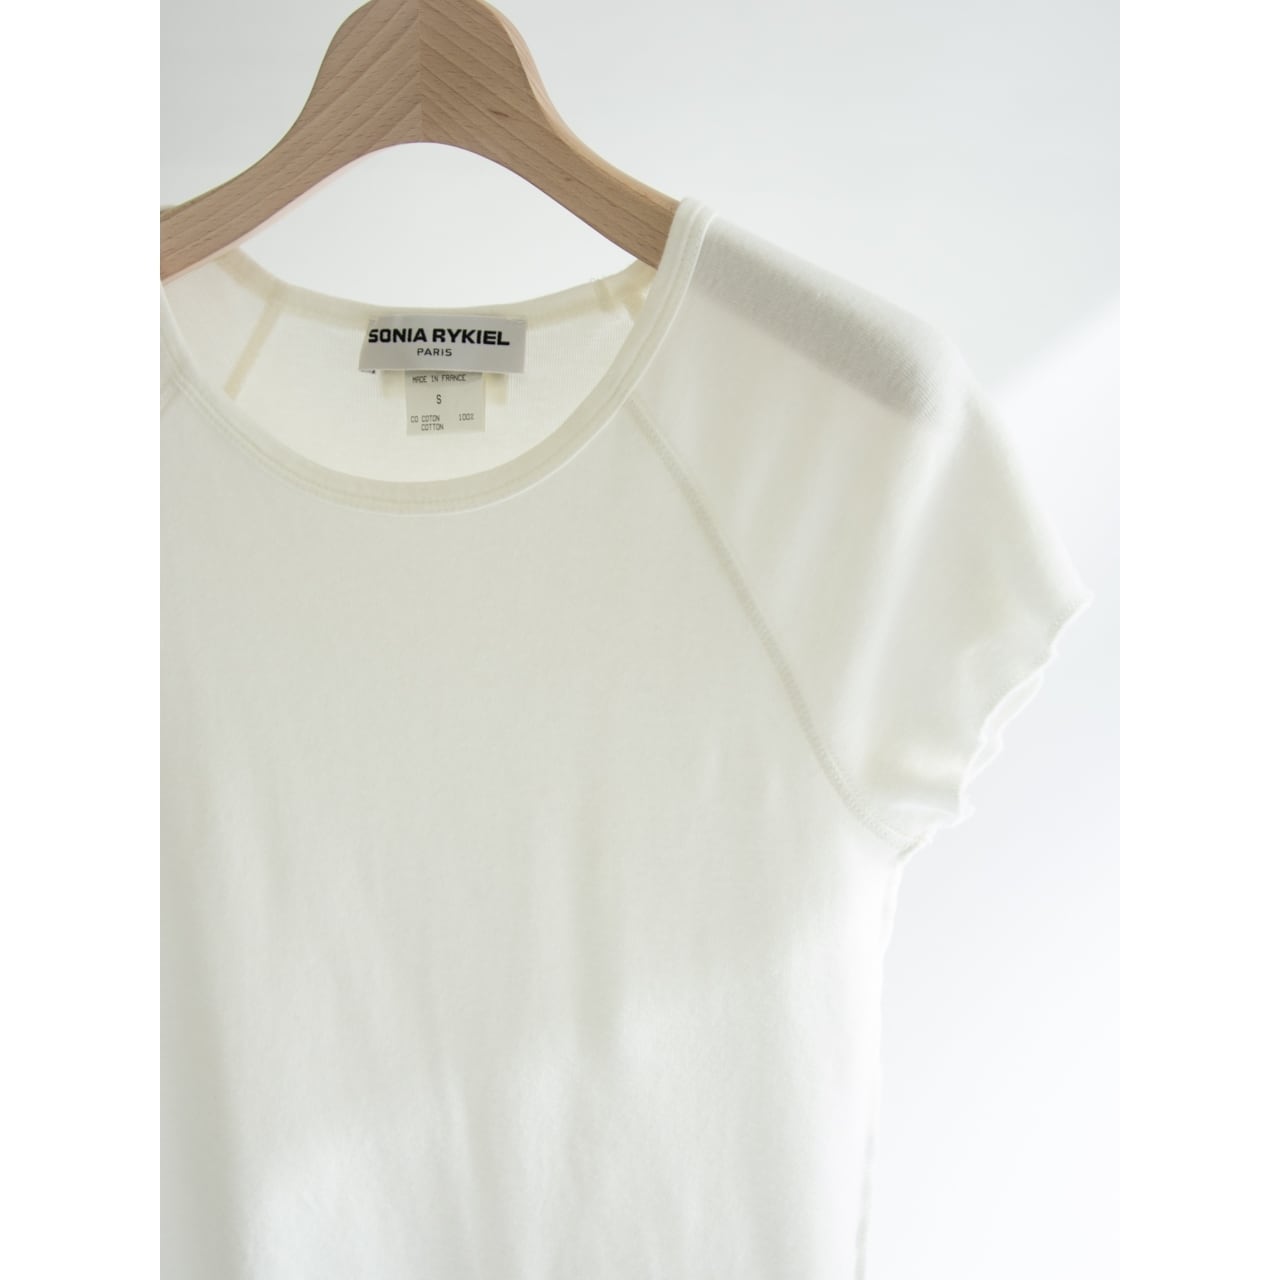 SONIA RYKIEL】Made in France 100% Cotton T-shirt（ソニアリキエル フランス製 コットンTシャツ） |  MASCOT/E